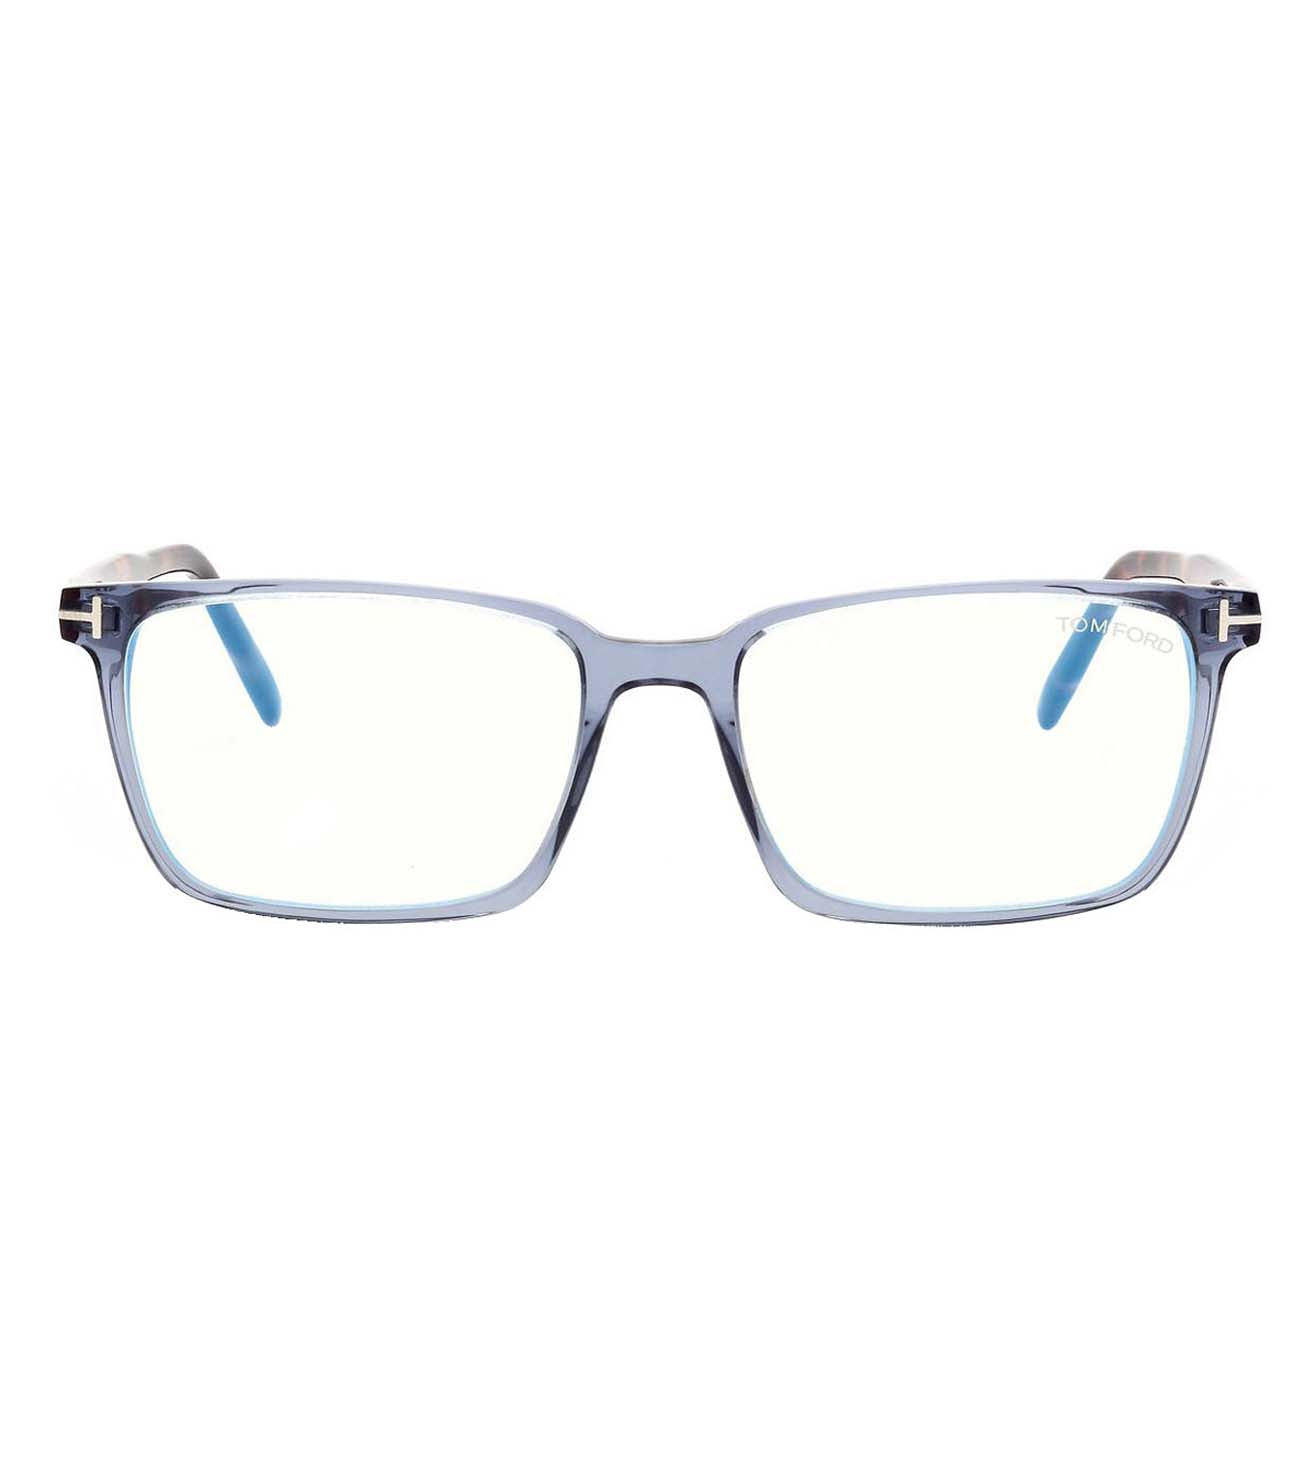 Tom Ford Men's Blue Crystal Rectangular Optical Frame